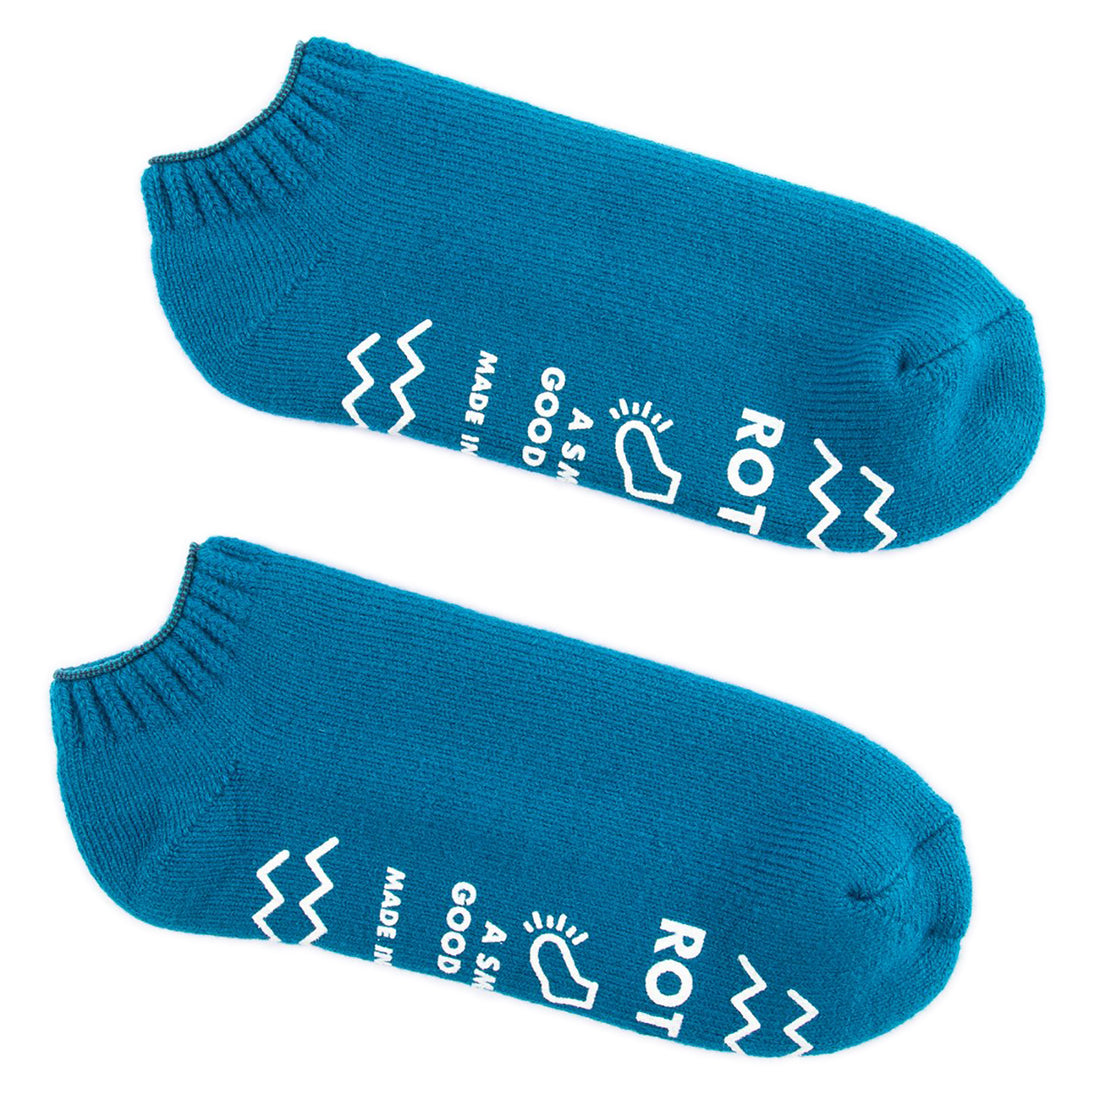 RoToTo Pile Socks Slipper - Sea Blue - Standard & Strange